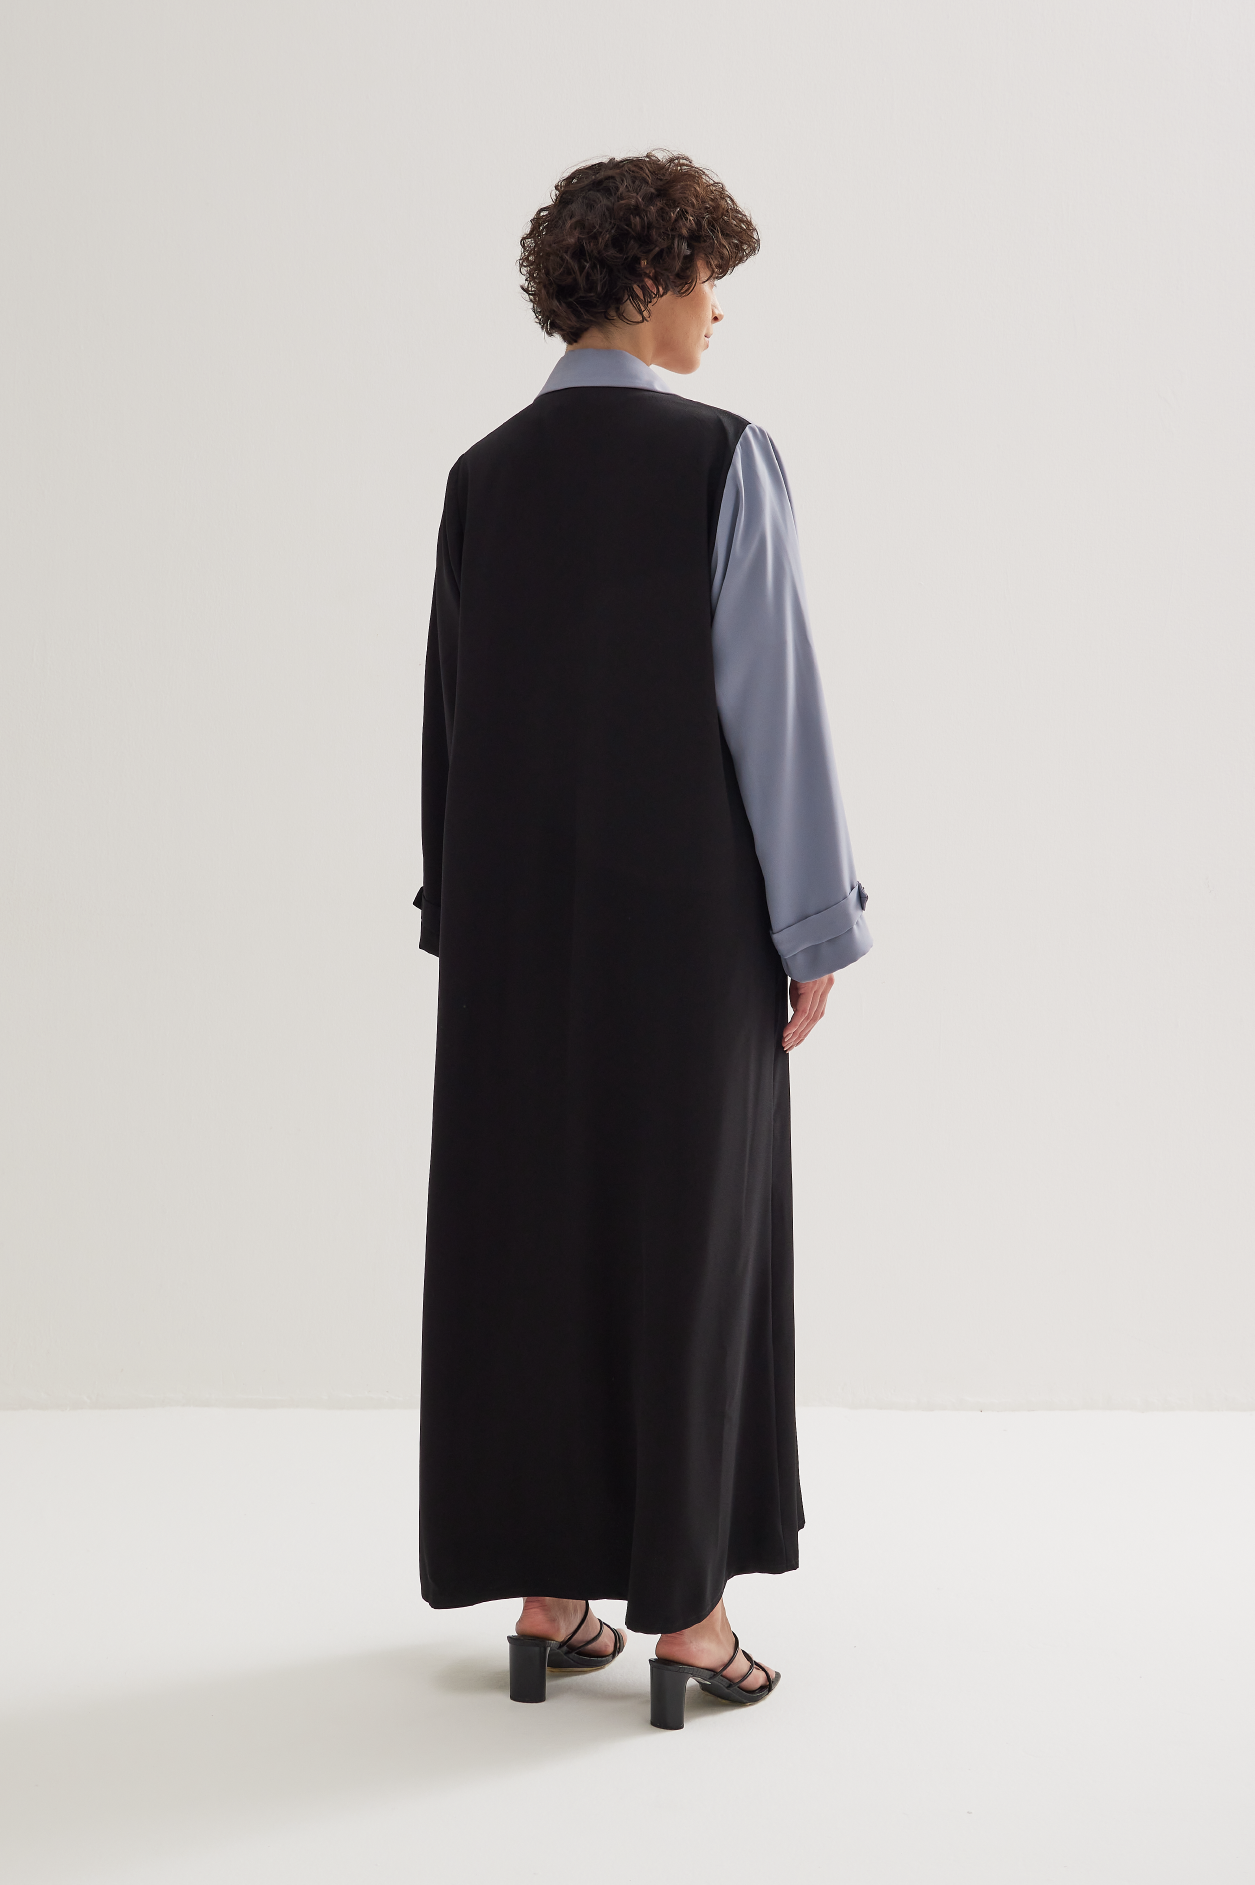 Coat Abaya in Greyish Blue and Black